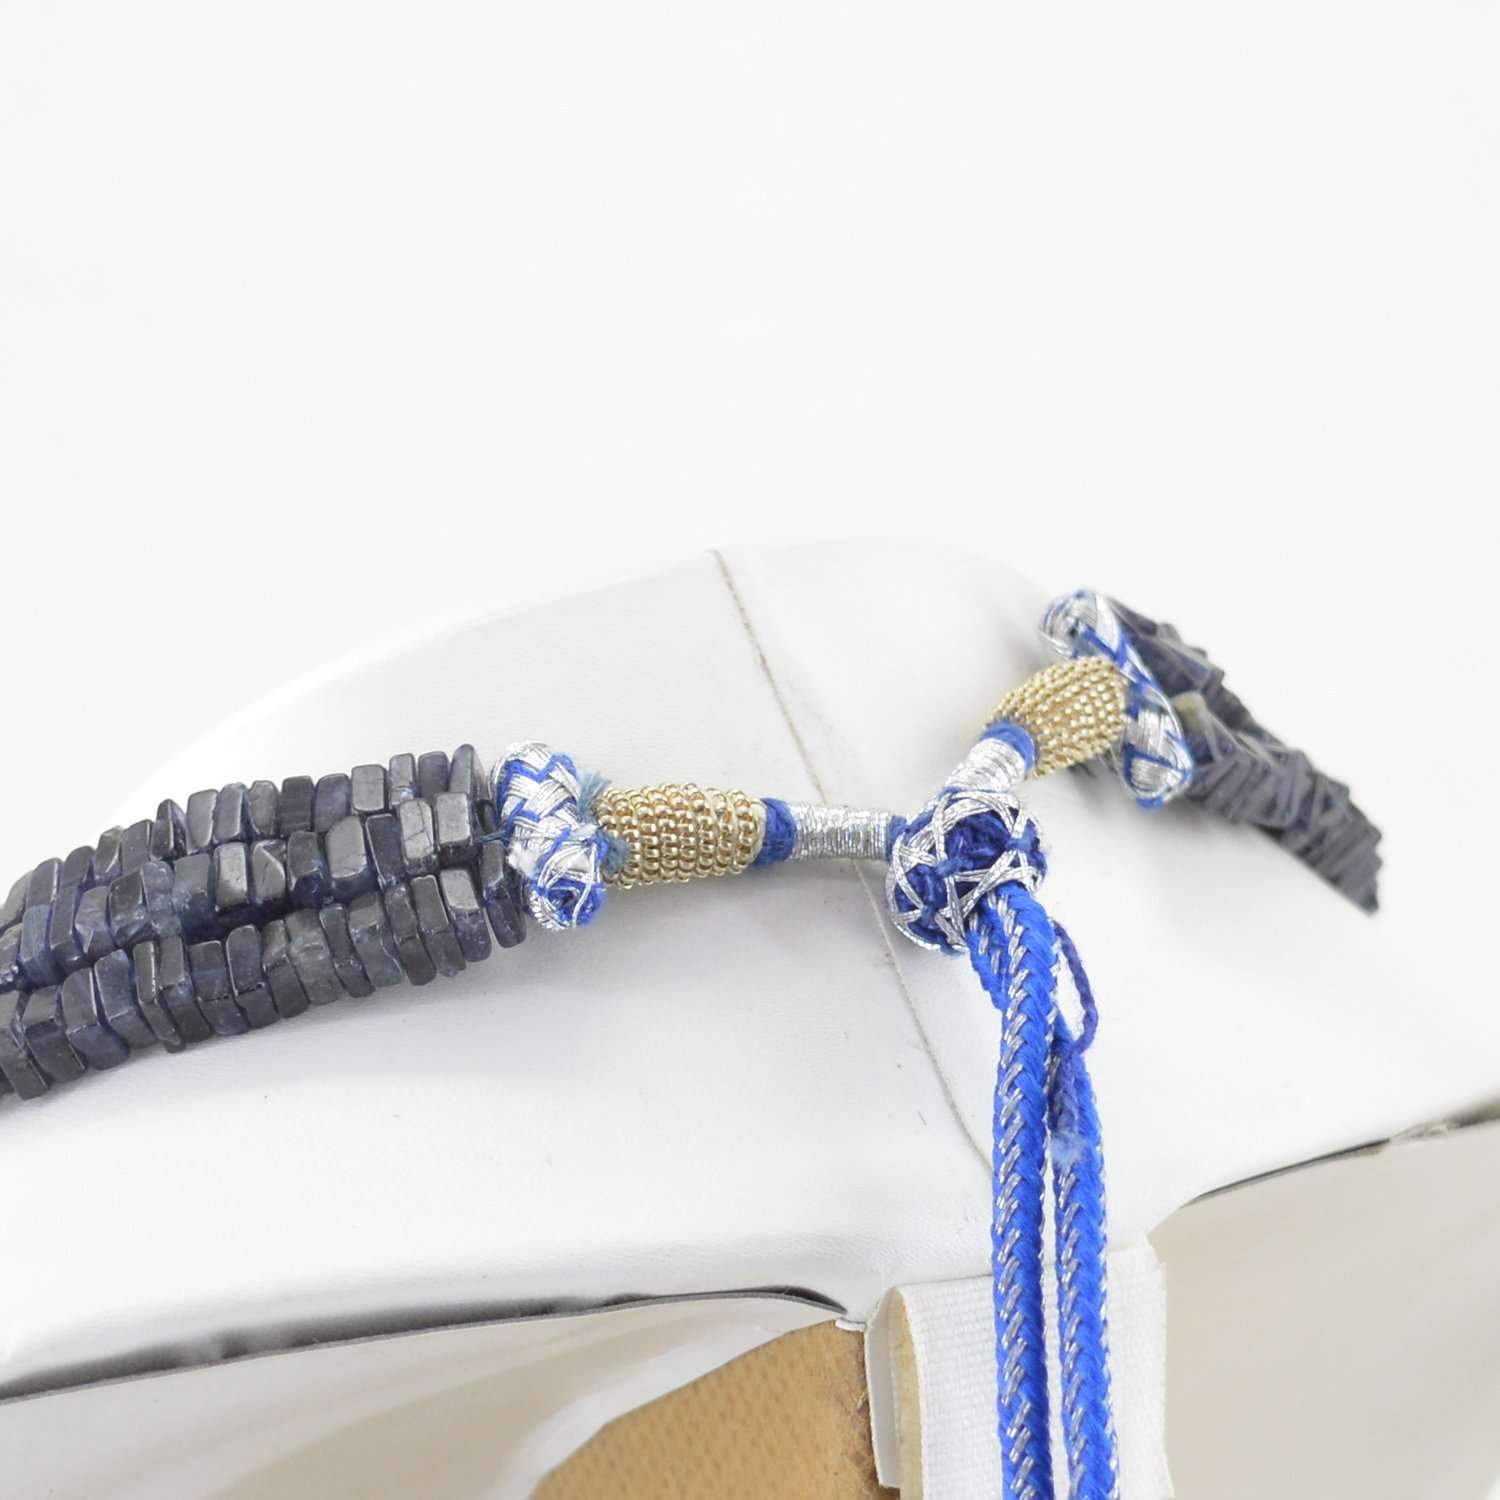 gemsmore:Natural Blue Tanzanite Necklace 3 Strand Untreated Beads